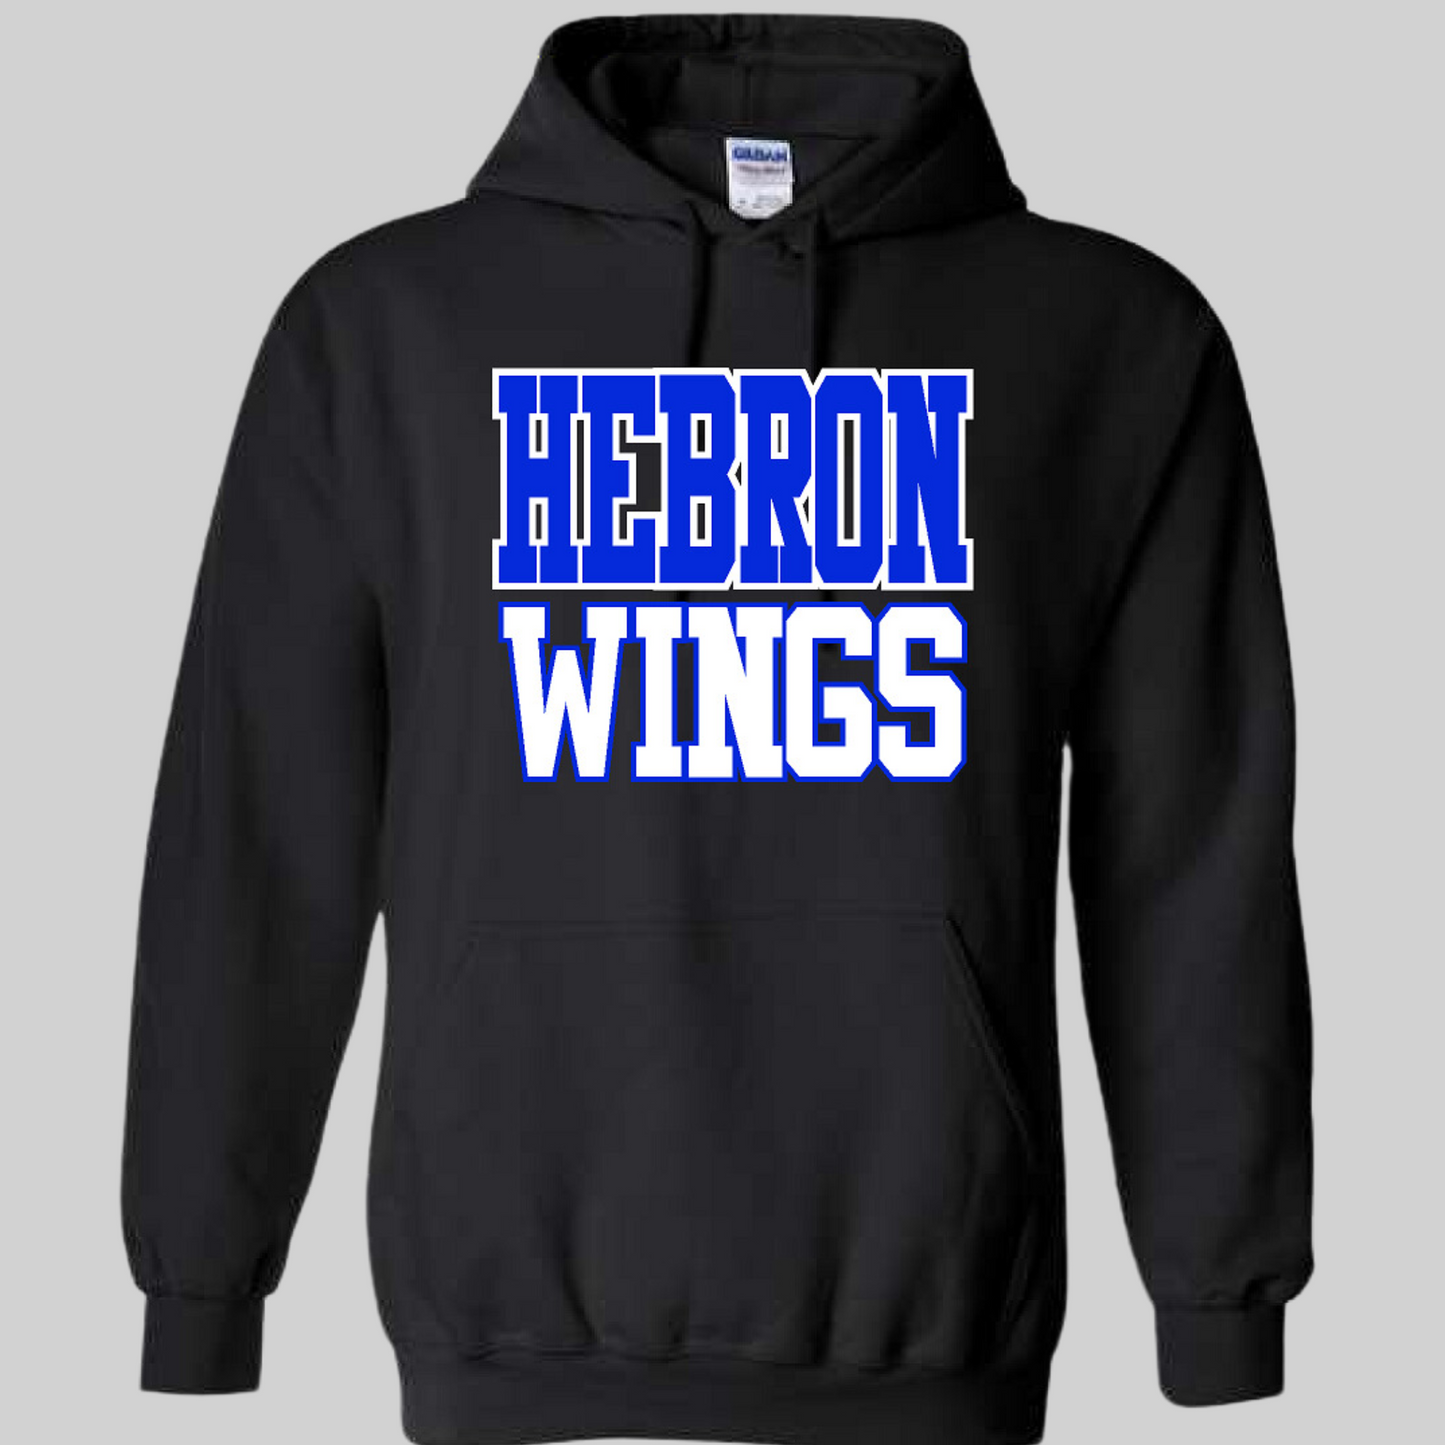 Hebron High School Silver Wings 24-8